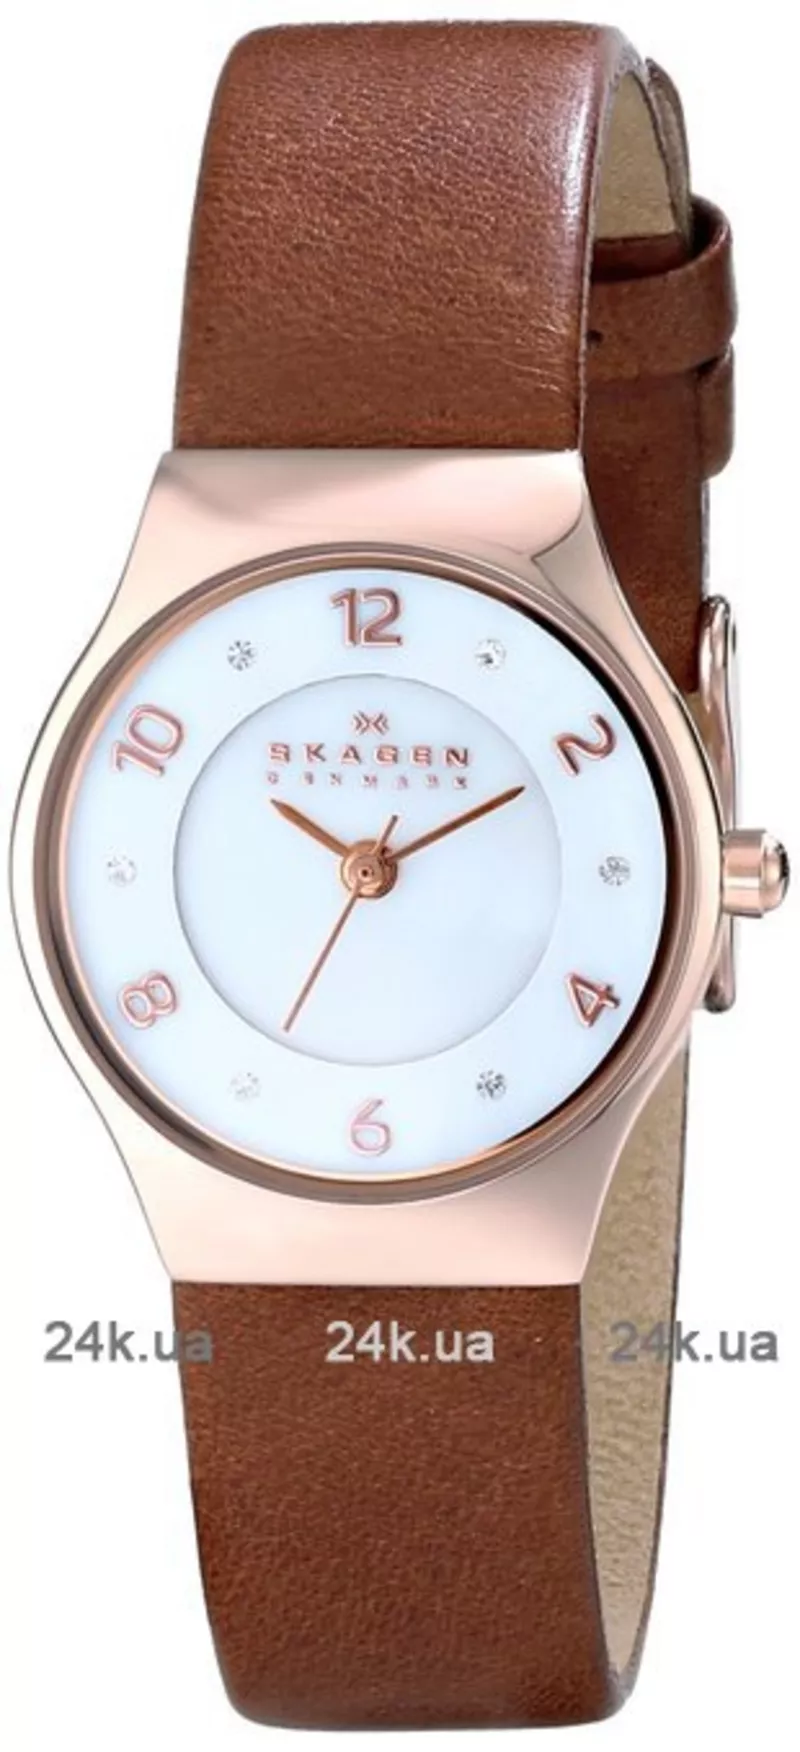 Часы Skagen SKW2210